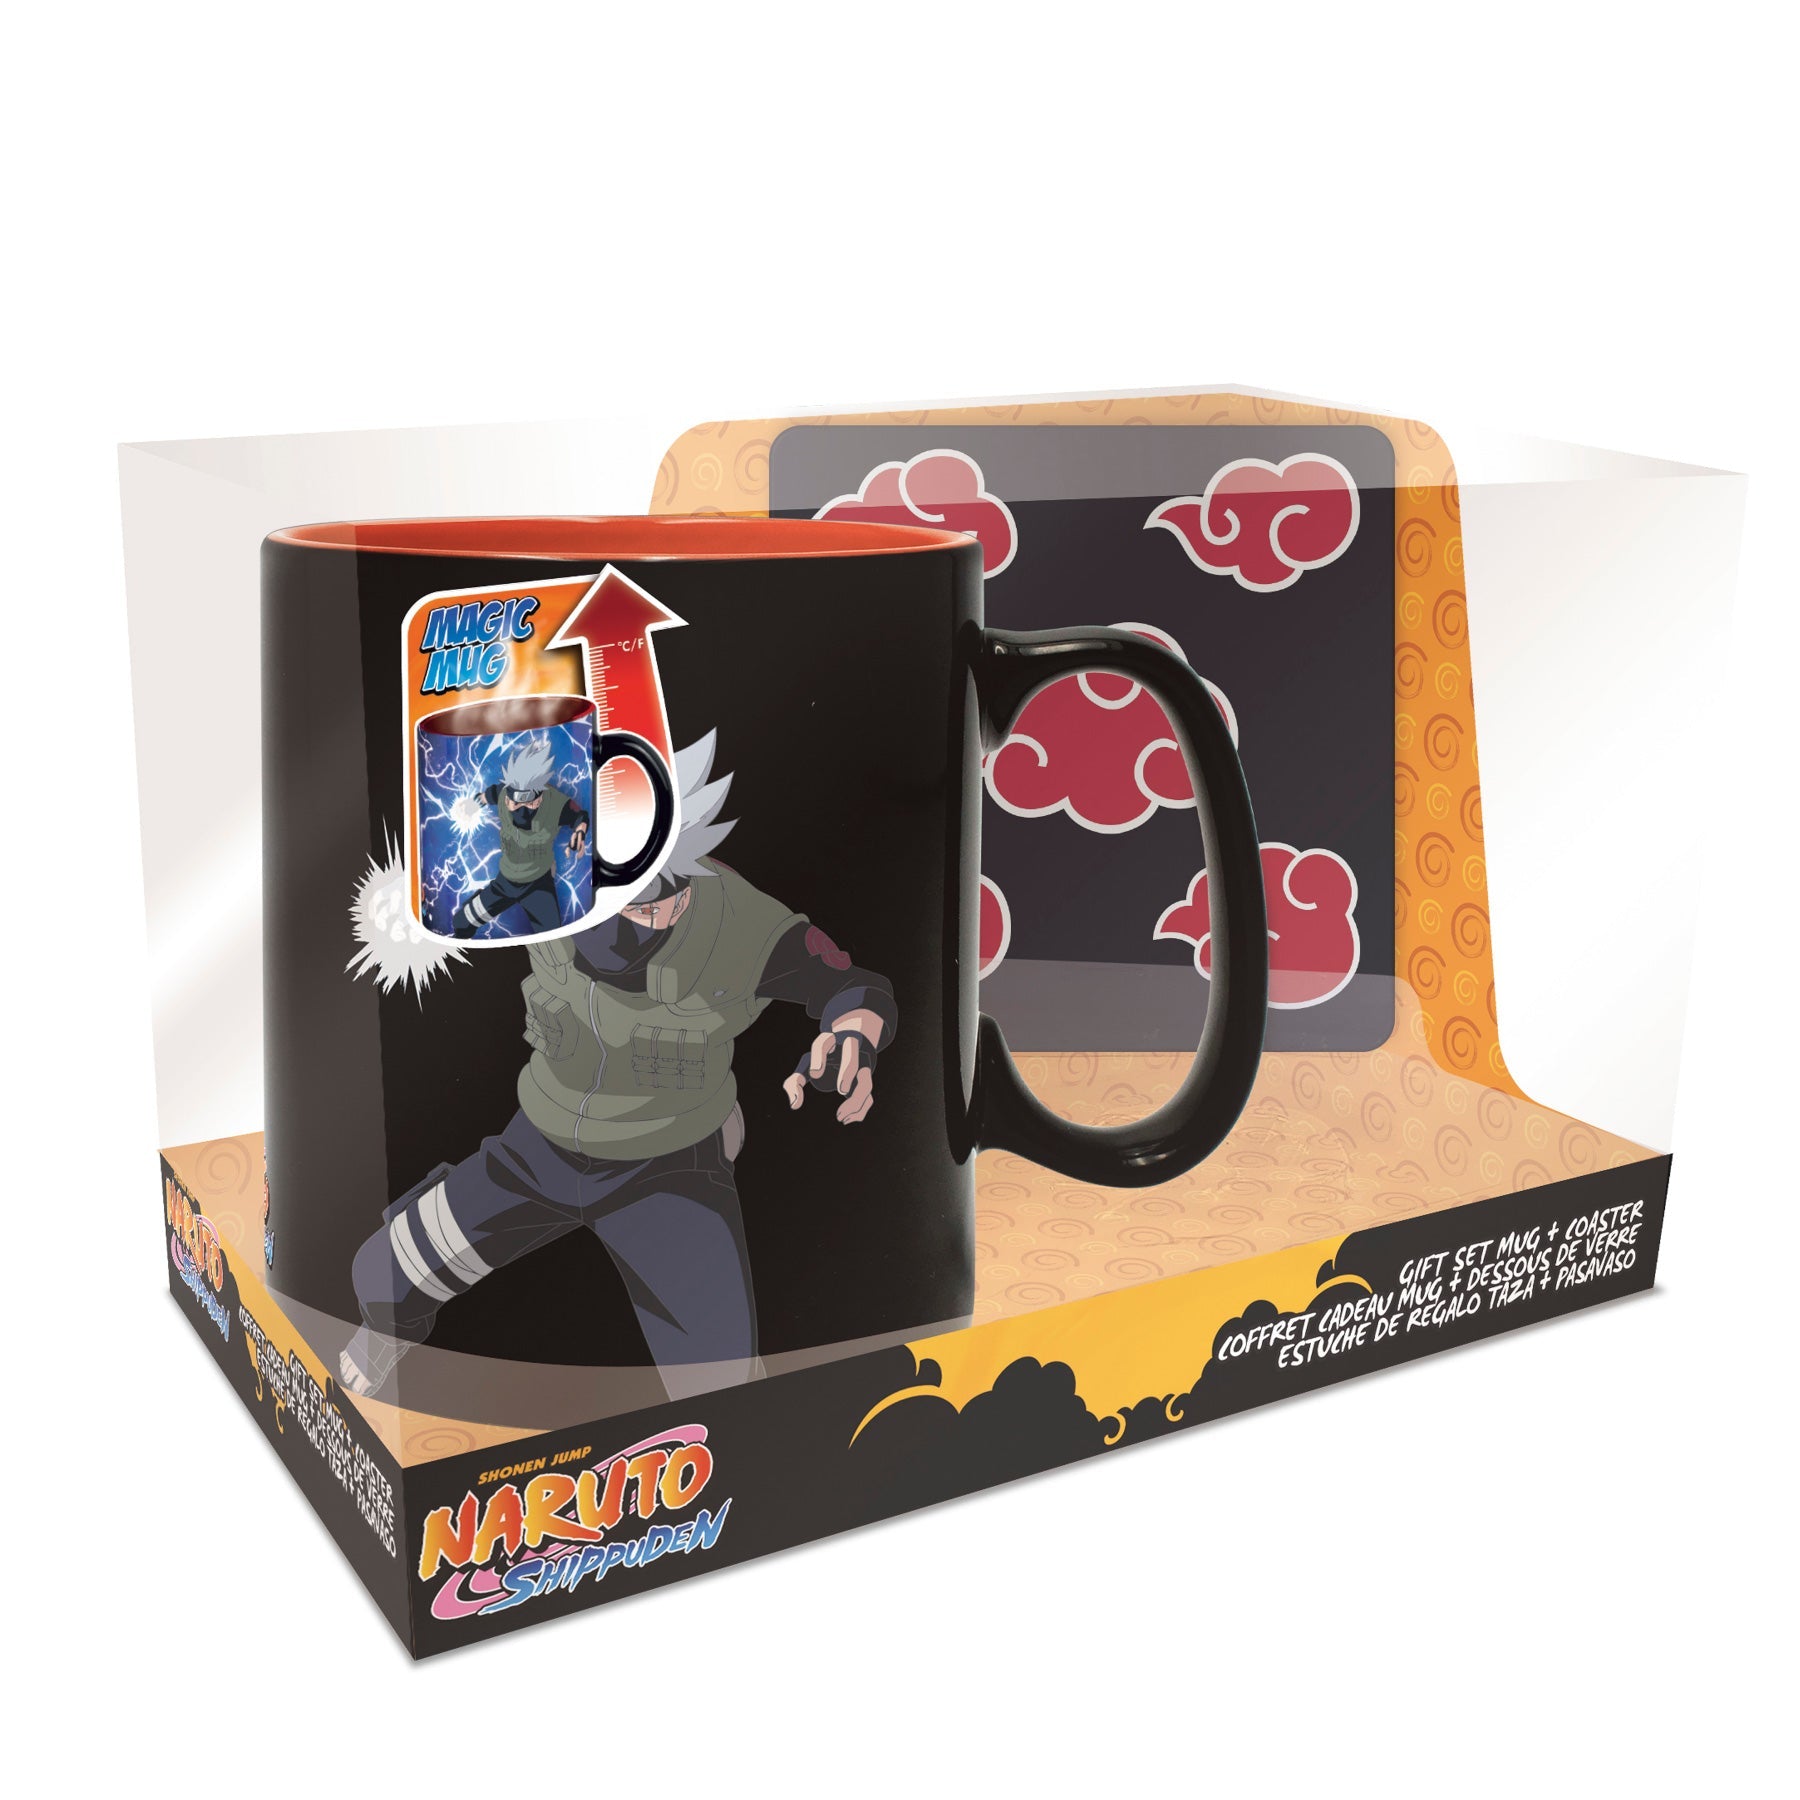 Naruto Shippuden Sharingan Heat-Change Mug and Coaster Set - Abysse - 5